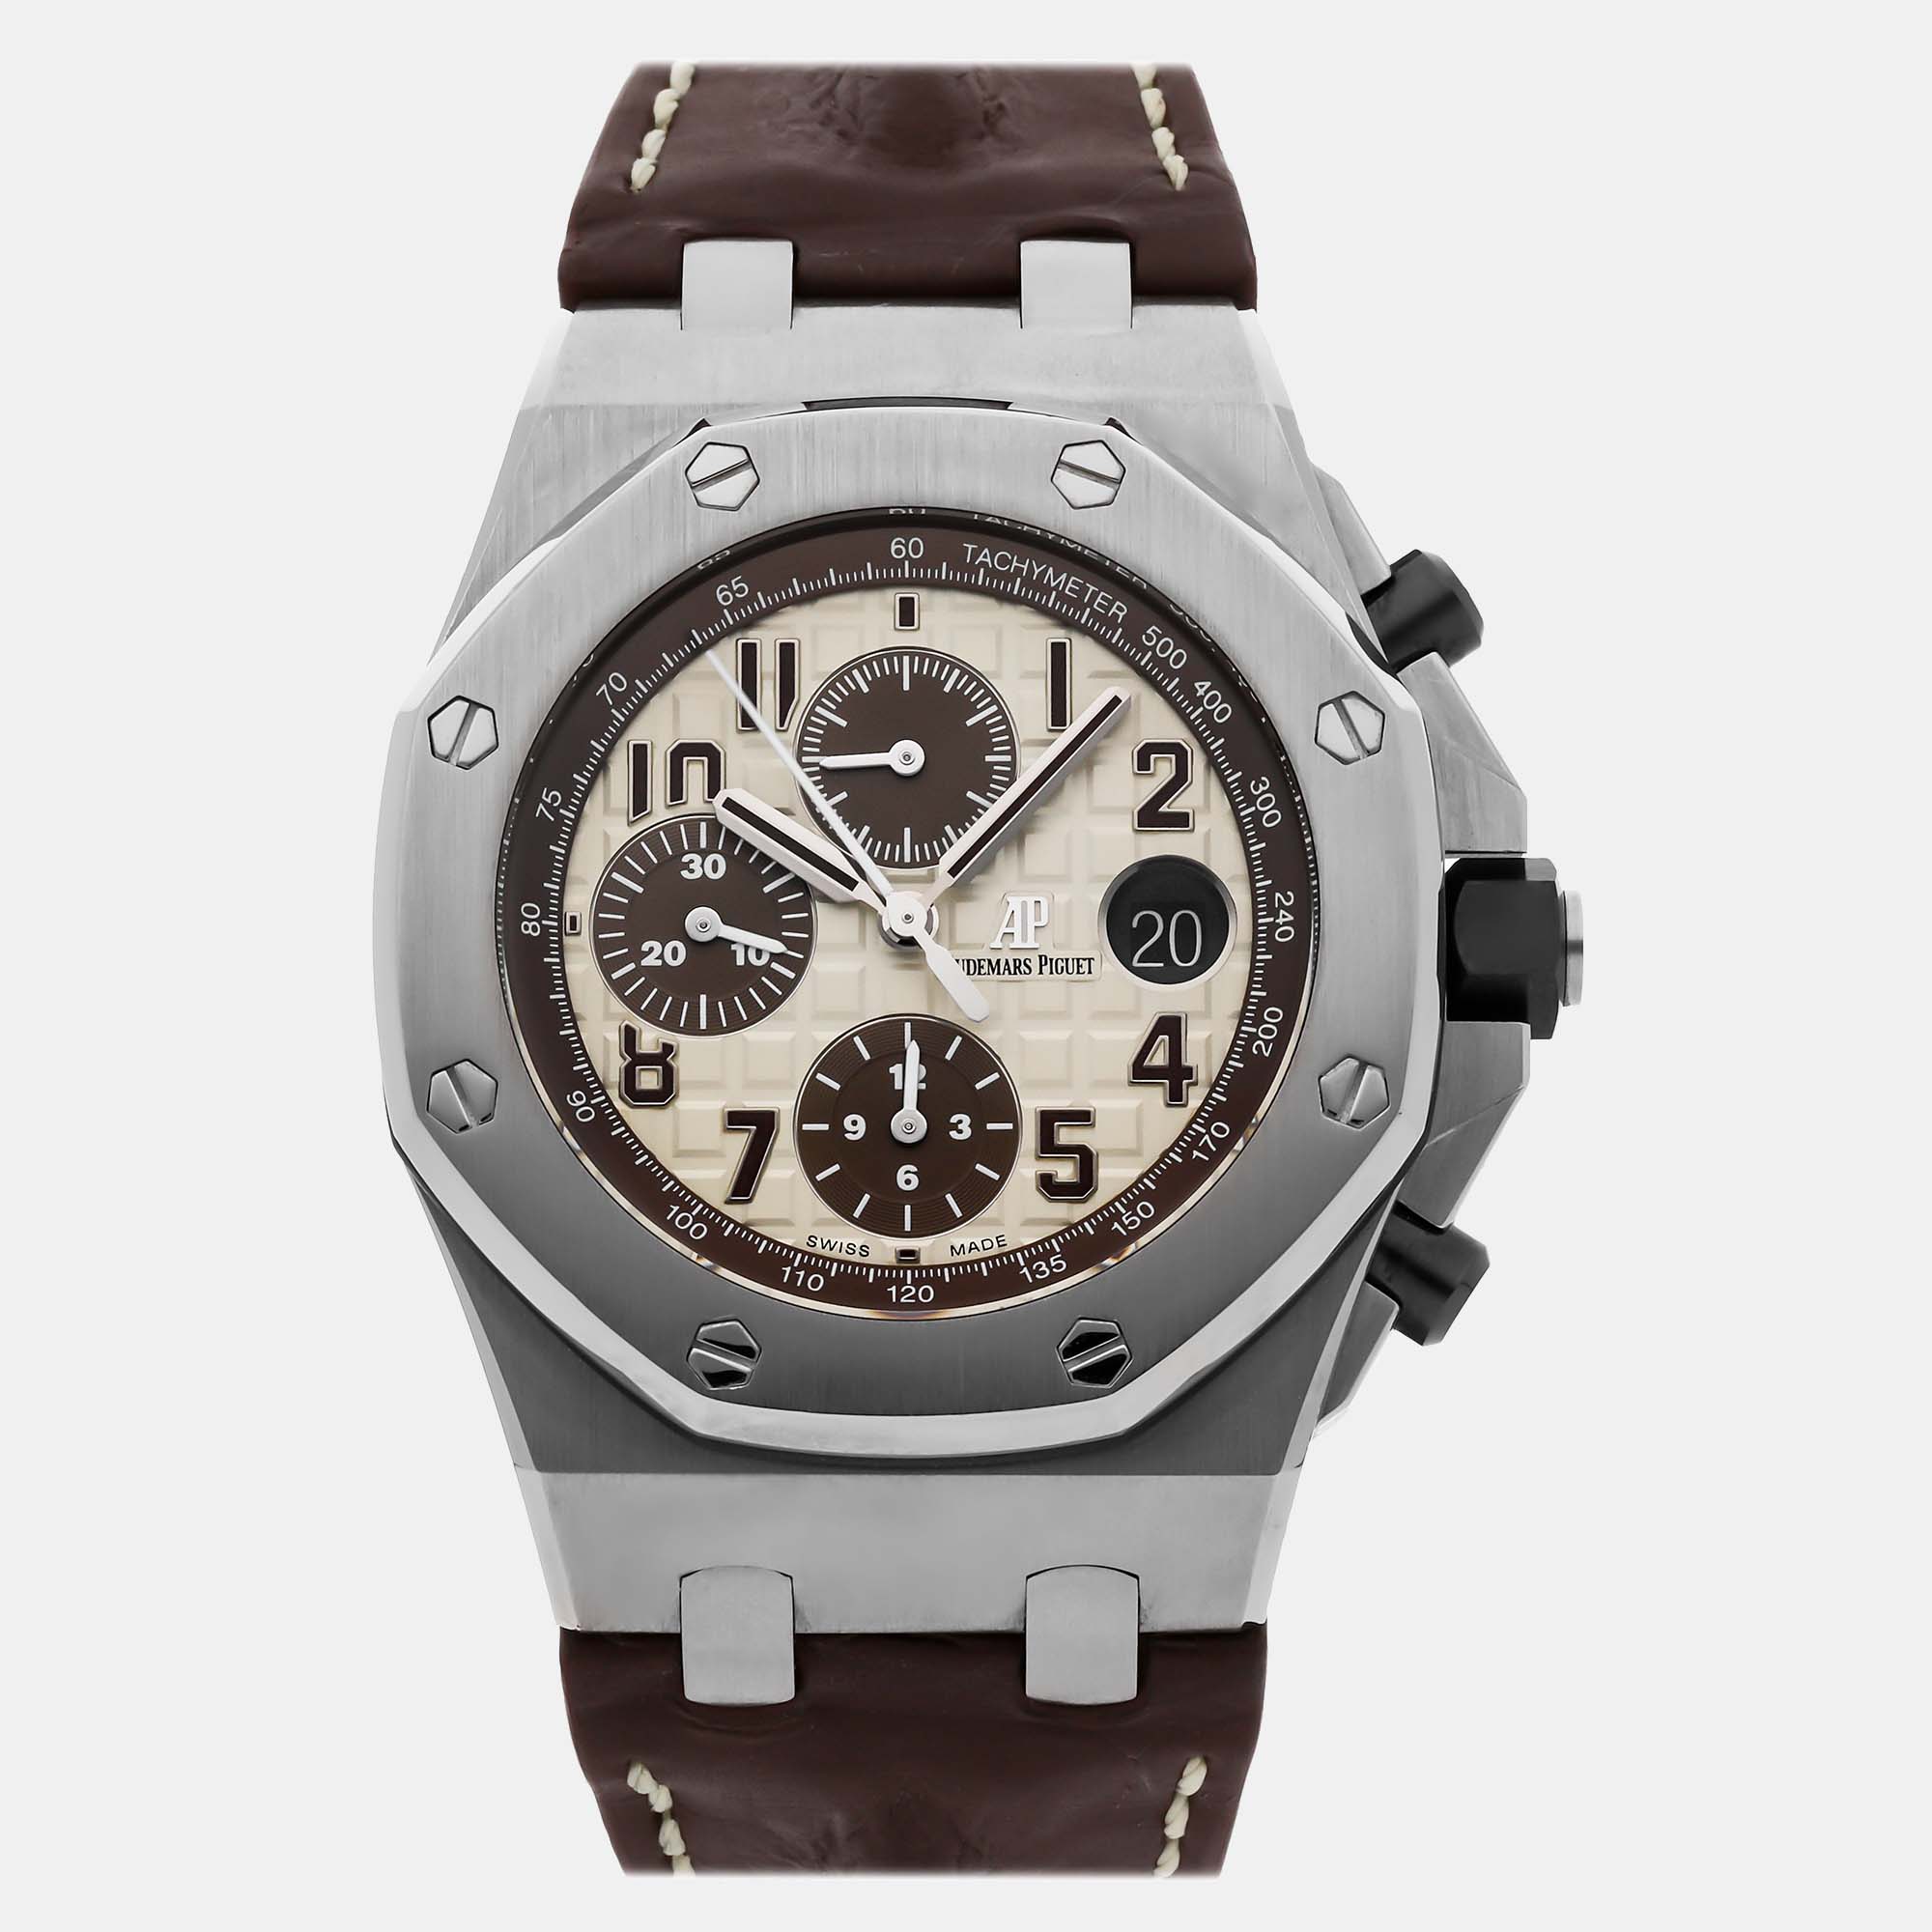 Audemars Piguet White Stainless Steel Royal Oak Offshore  26470ST.OO.A801CR.01 Automatic Men's Wristwatch 42 Mm